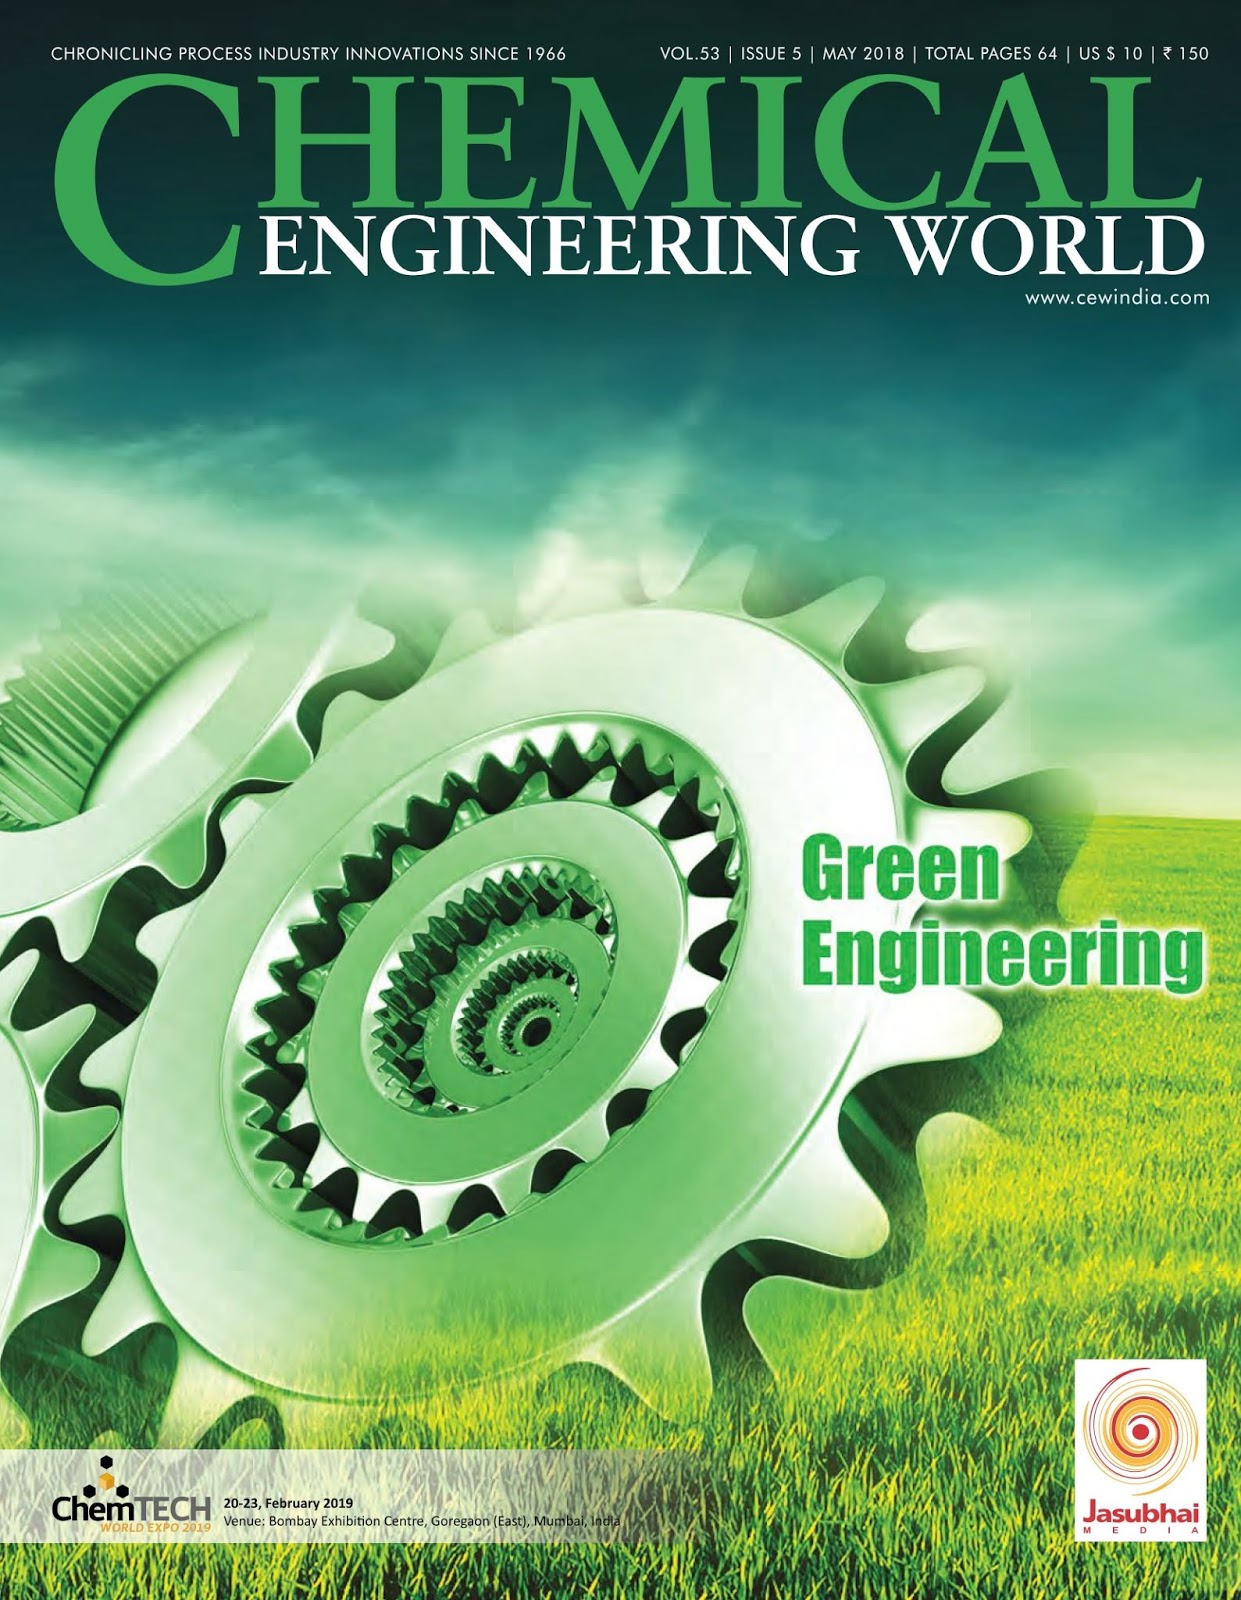 World of engineering. Зеленая инженерия. World engine. Chemical Engineering book.